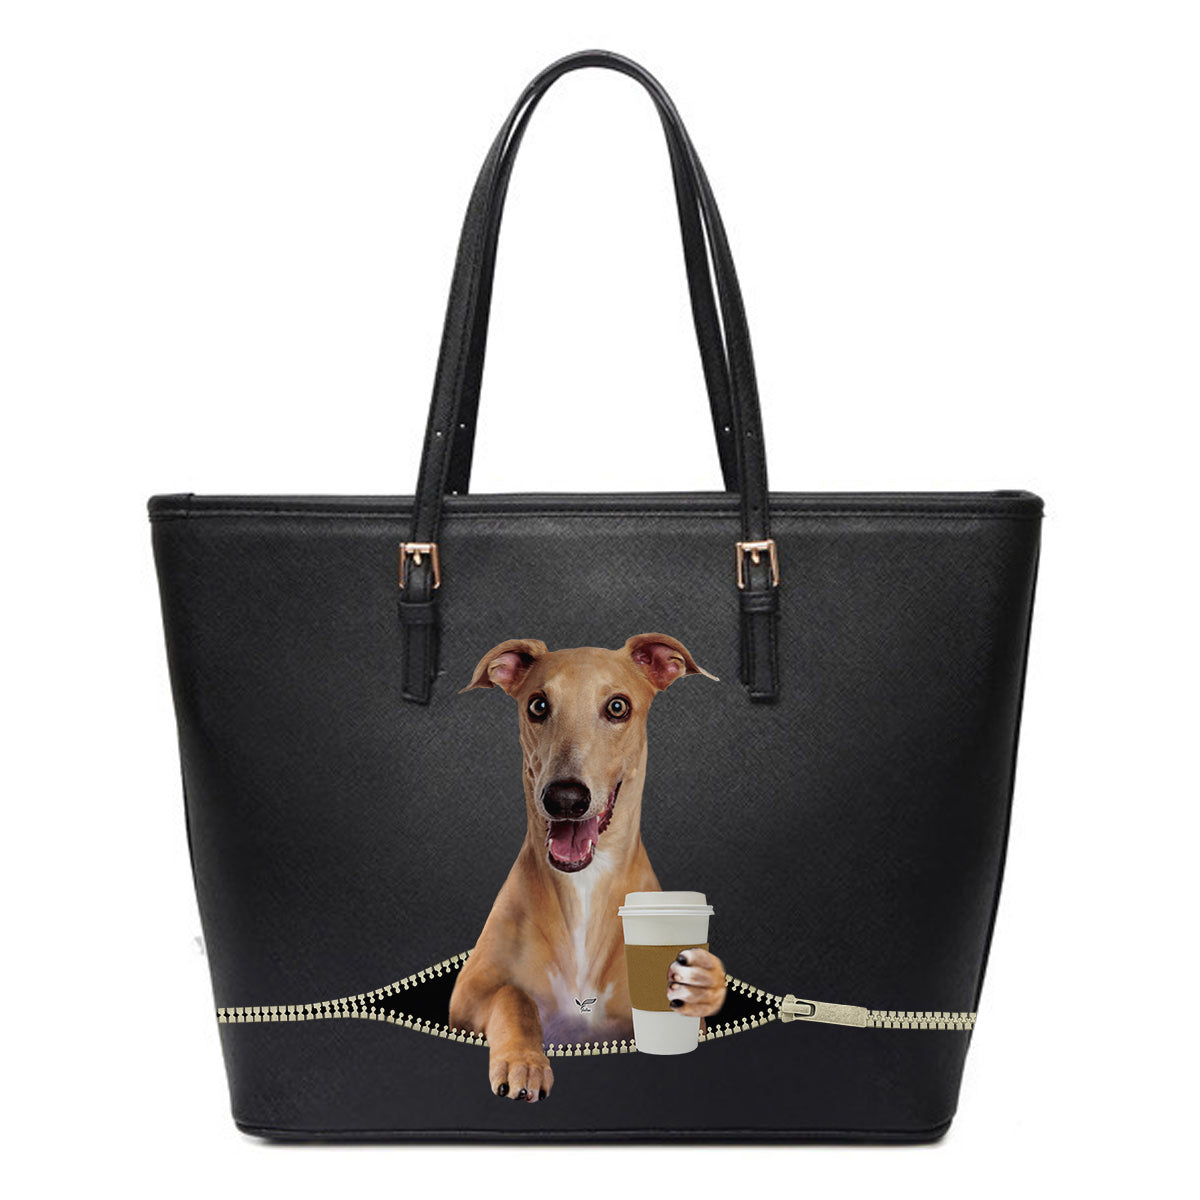 Good Morning - Greyhound Tote Bag V1